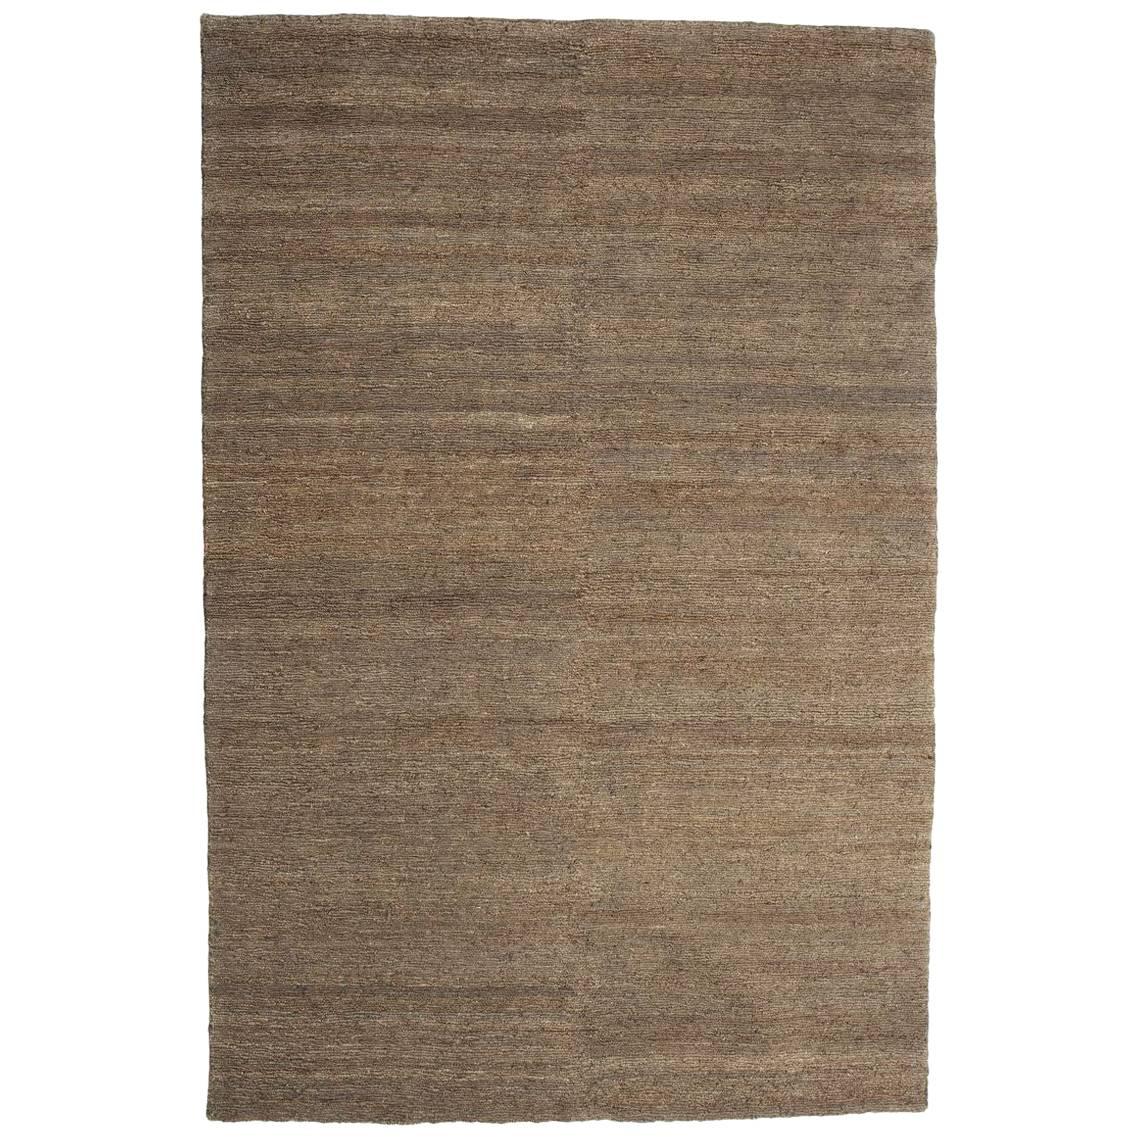 Khaki Earth Teppich aus handgeknüpfter Jute von Nani Marquina & Ariadna Miquel, klein